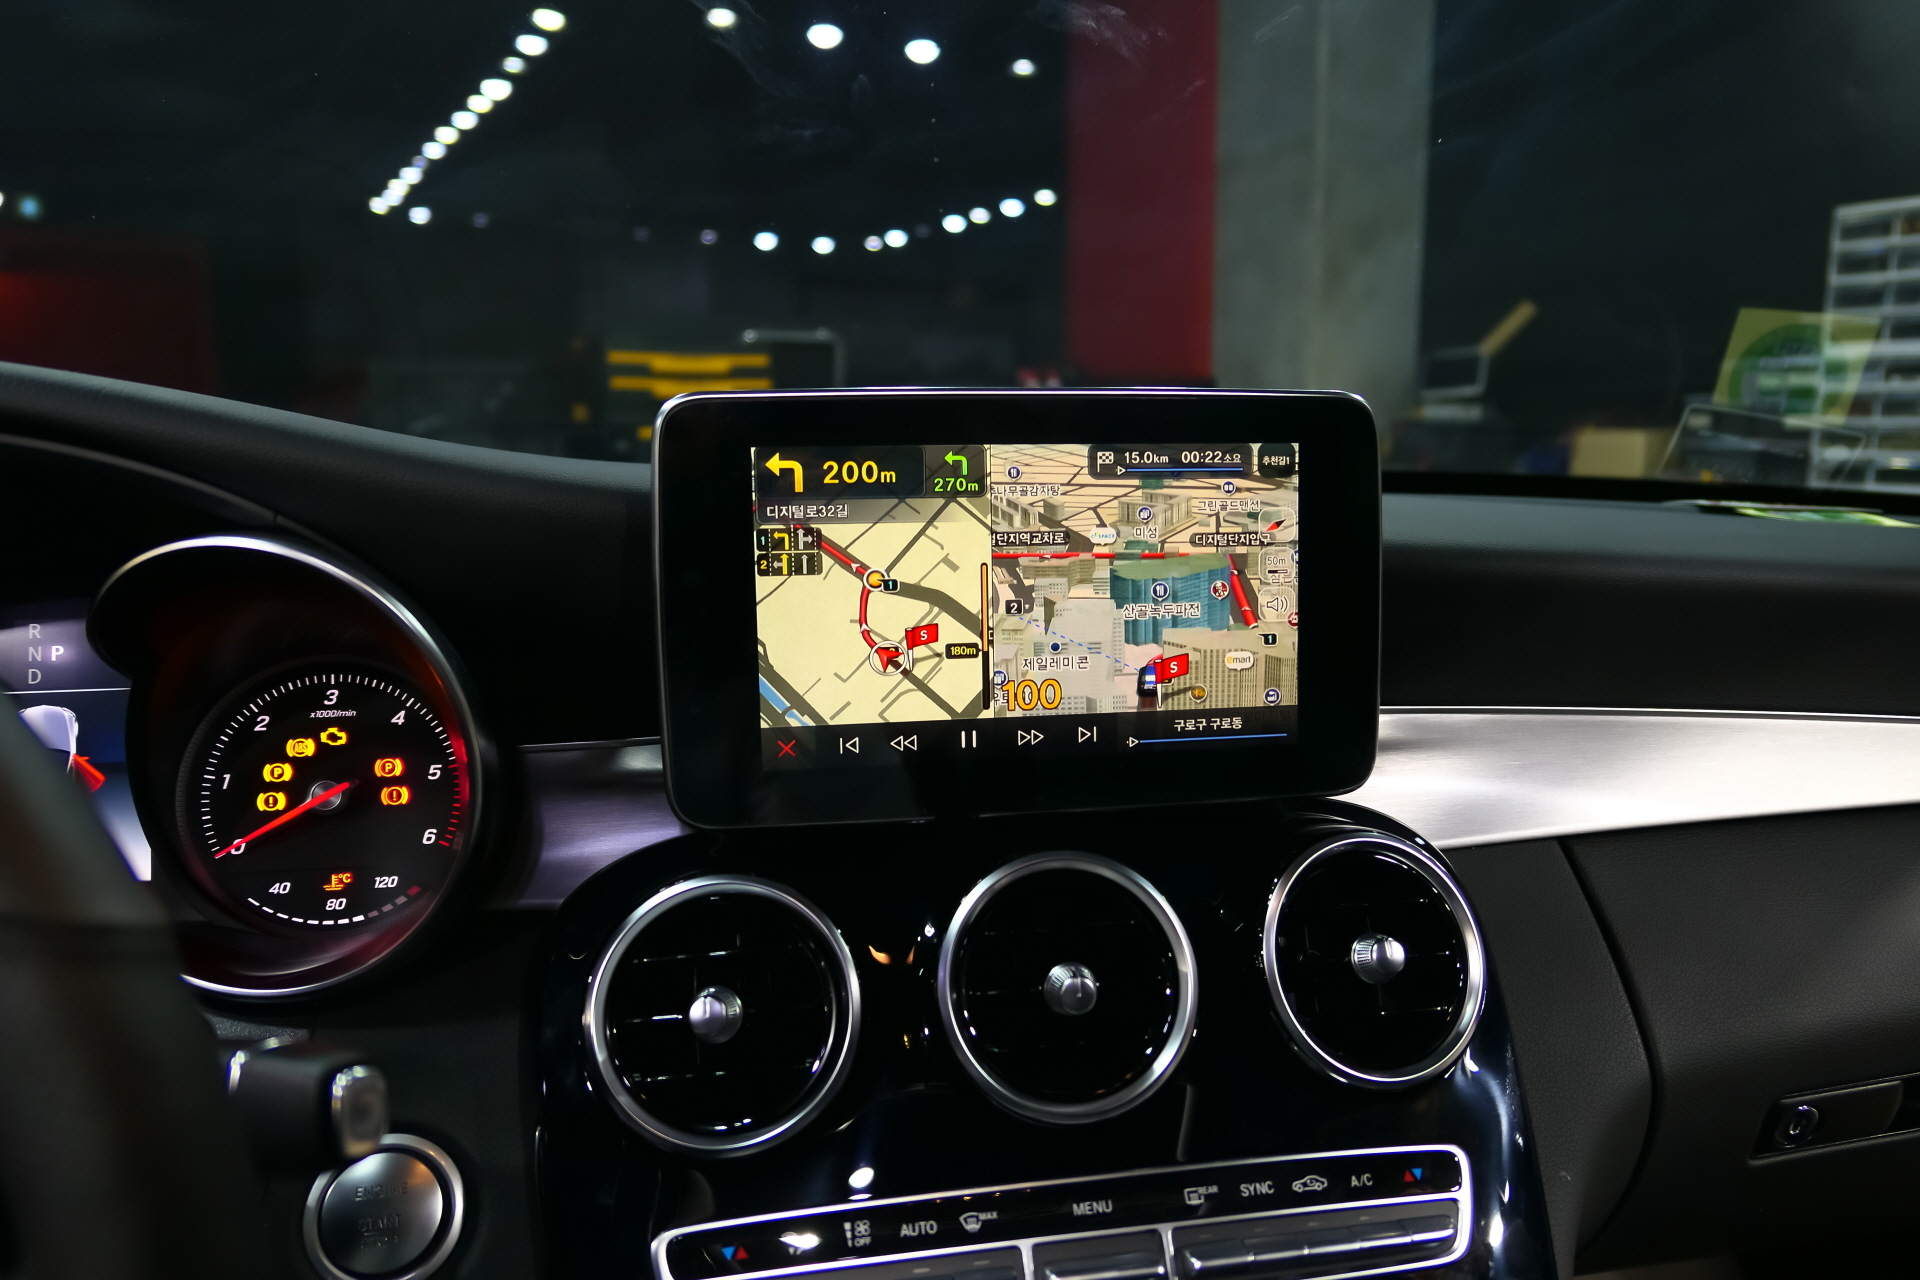 Android System for 2017 Mercedes-Benz W205 "N-LINK2 V4" "GAIA HUD"